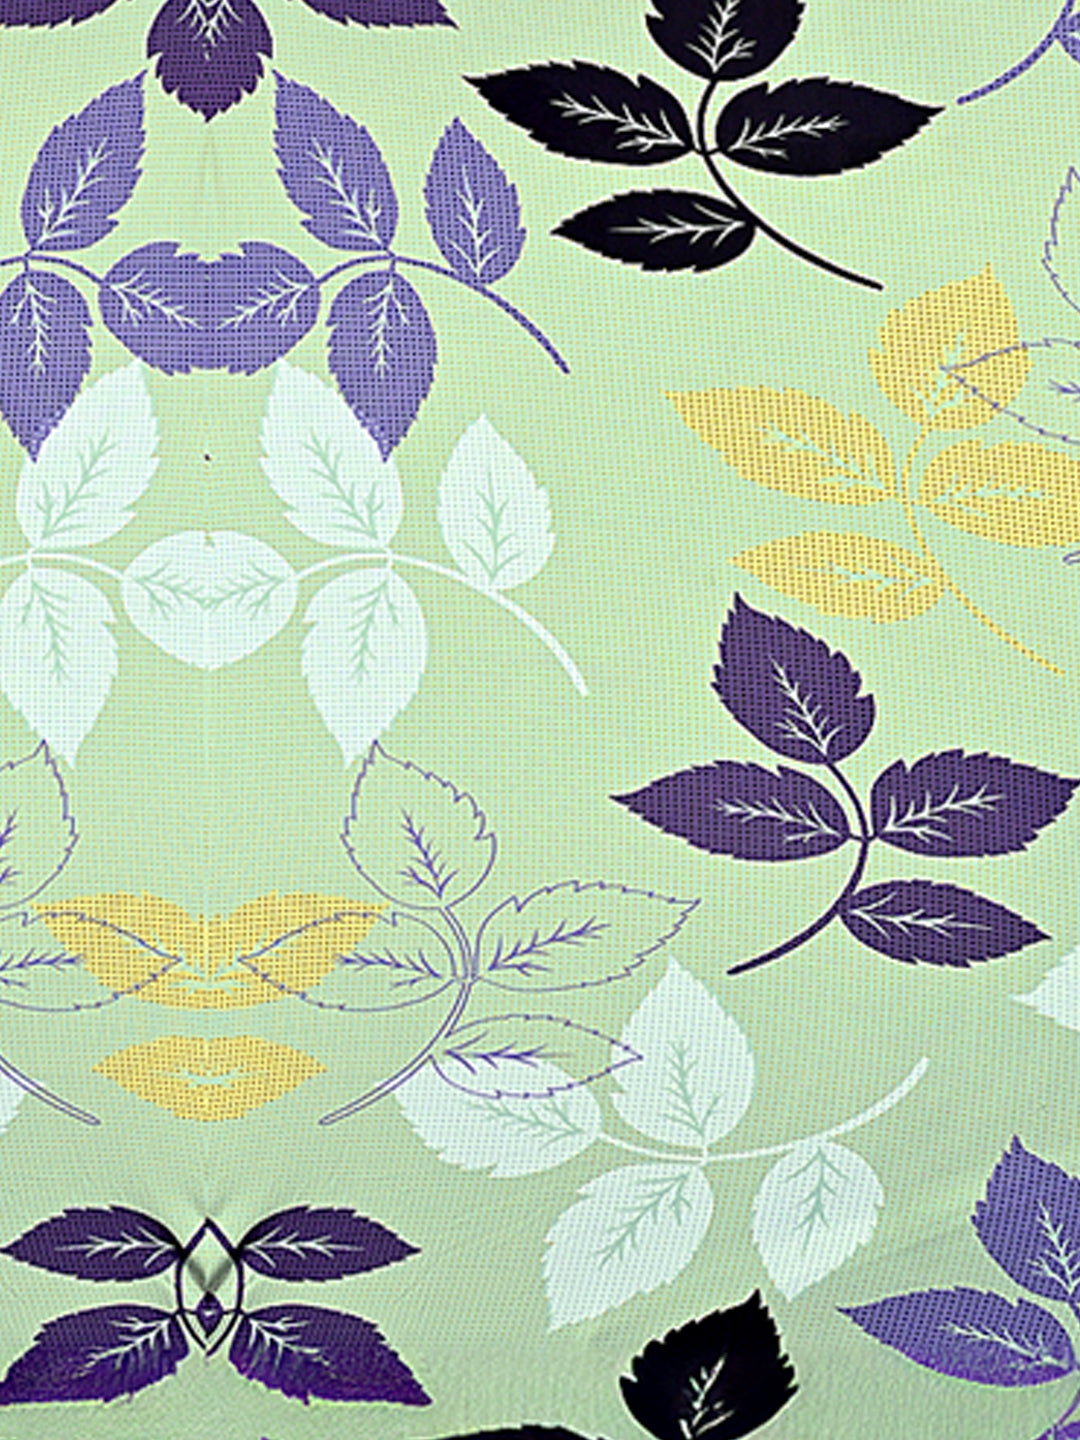 Elastic Floral Printed Sofa Cover 3 Seater- Green